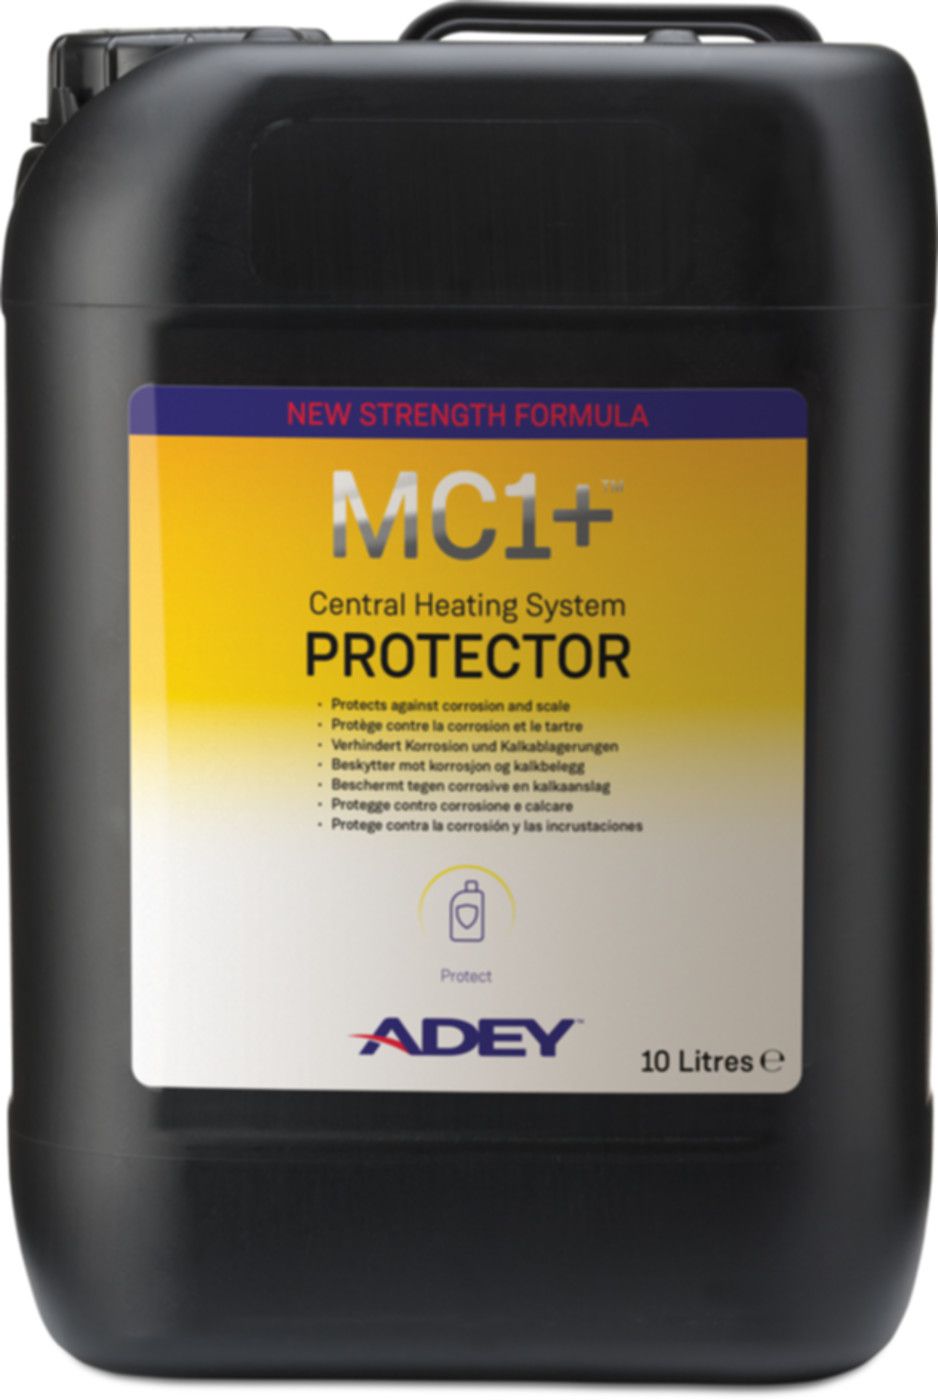 Heizungsschutzmittel ADEY Protector MC1+ 25 l Kanister - Heizungswasseraufbereitung